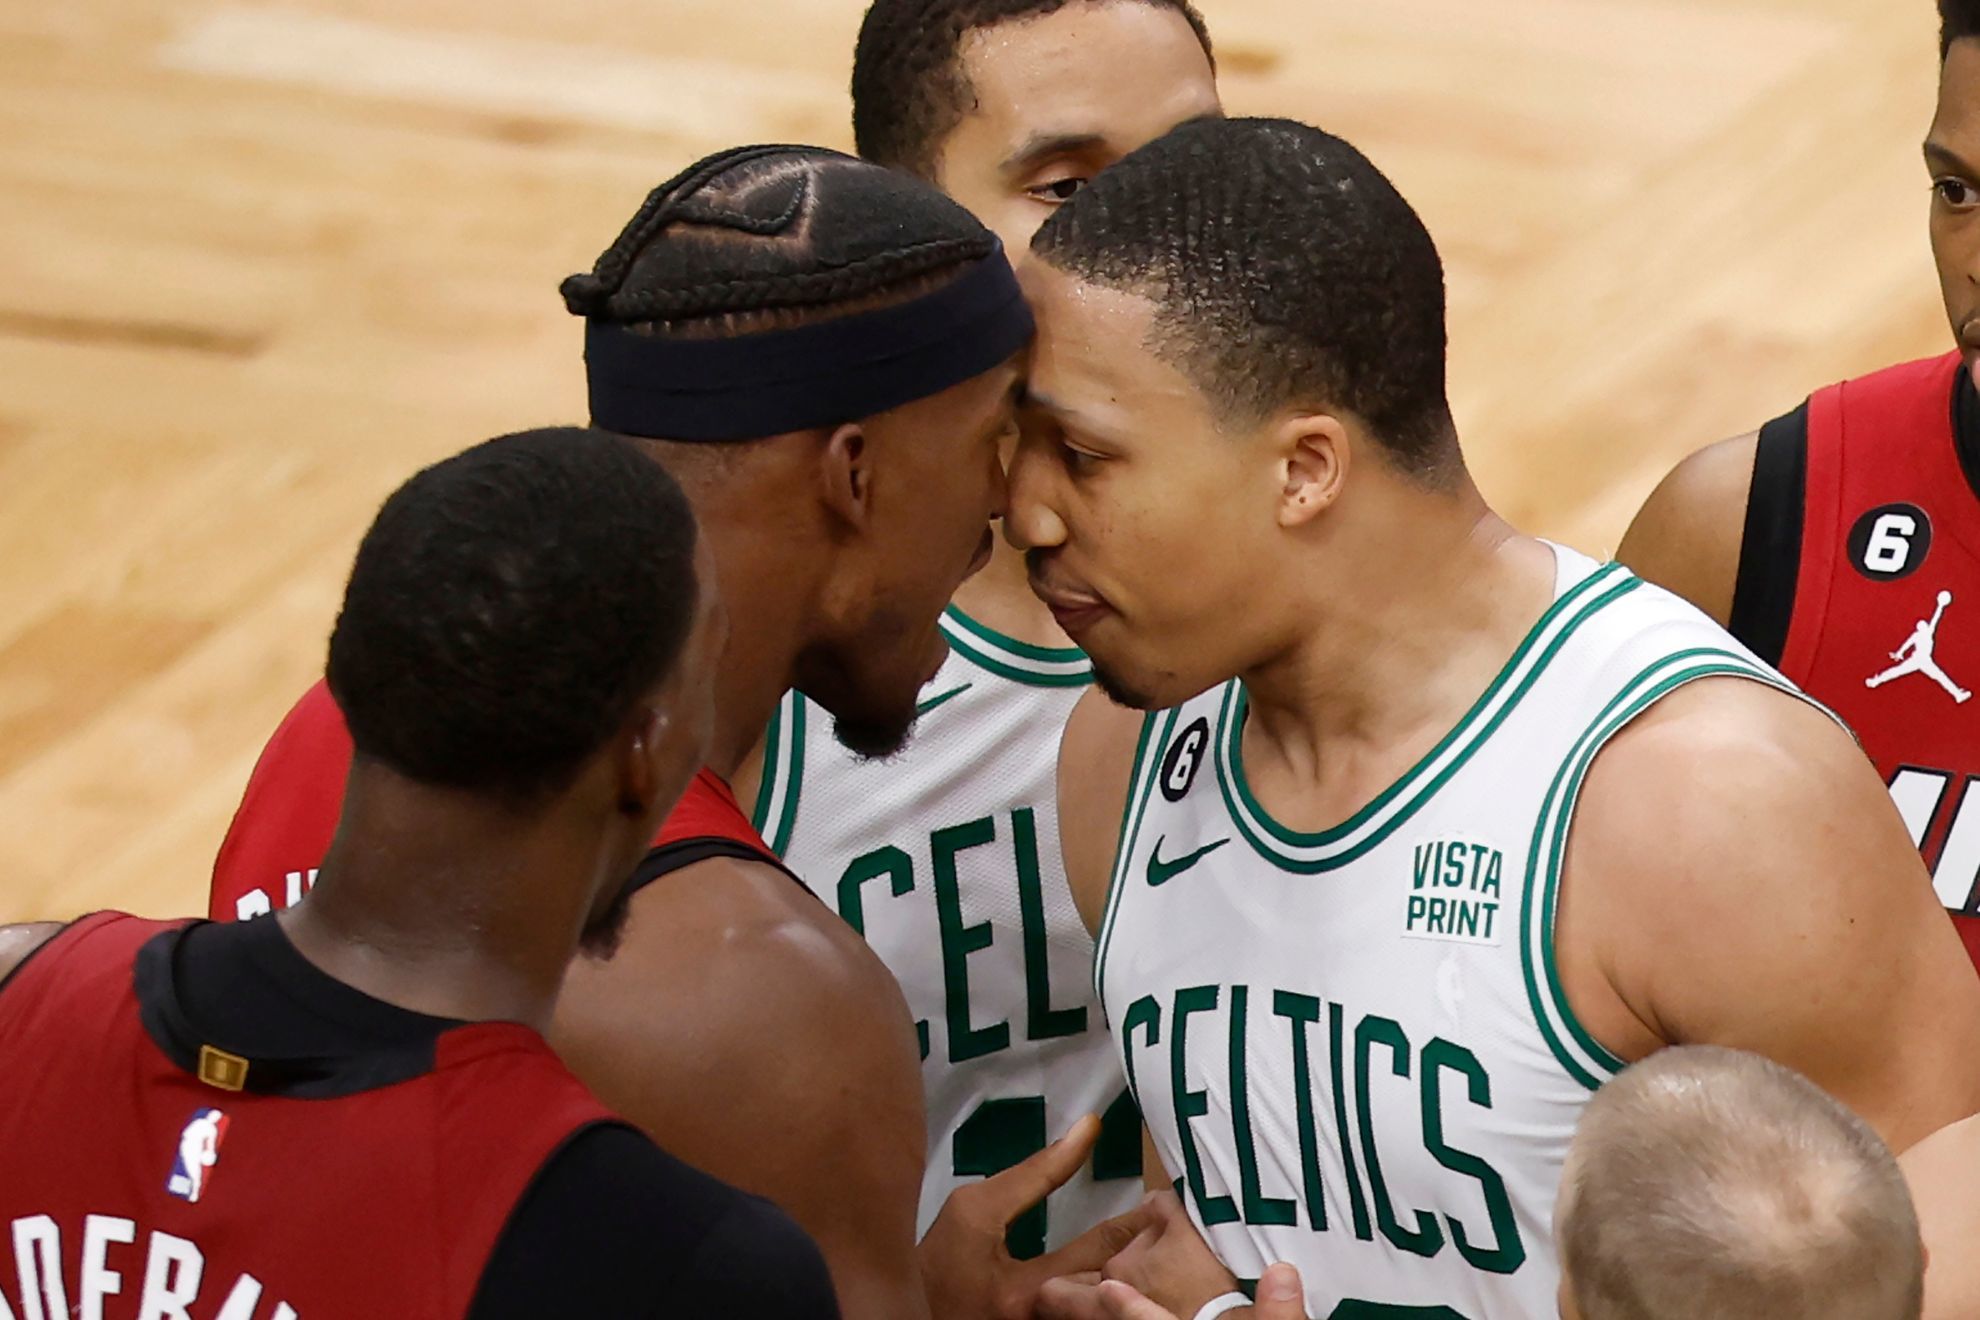 Jimmy Butler laughs last in Grant Williams battle, Heat again upset Celtics